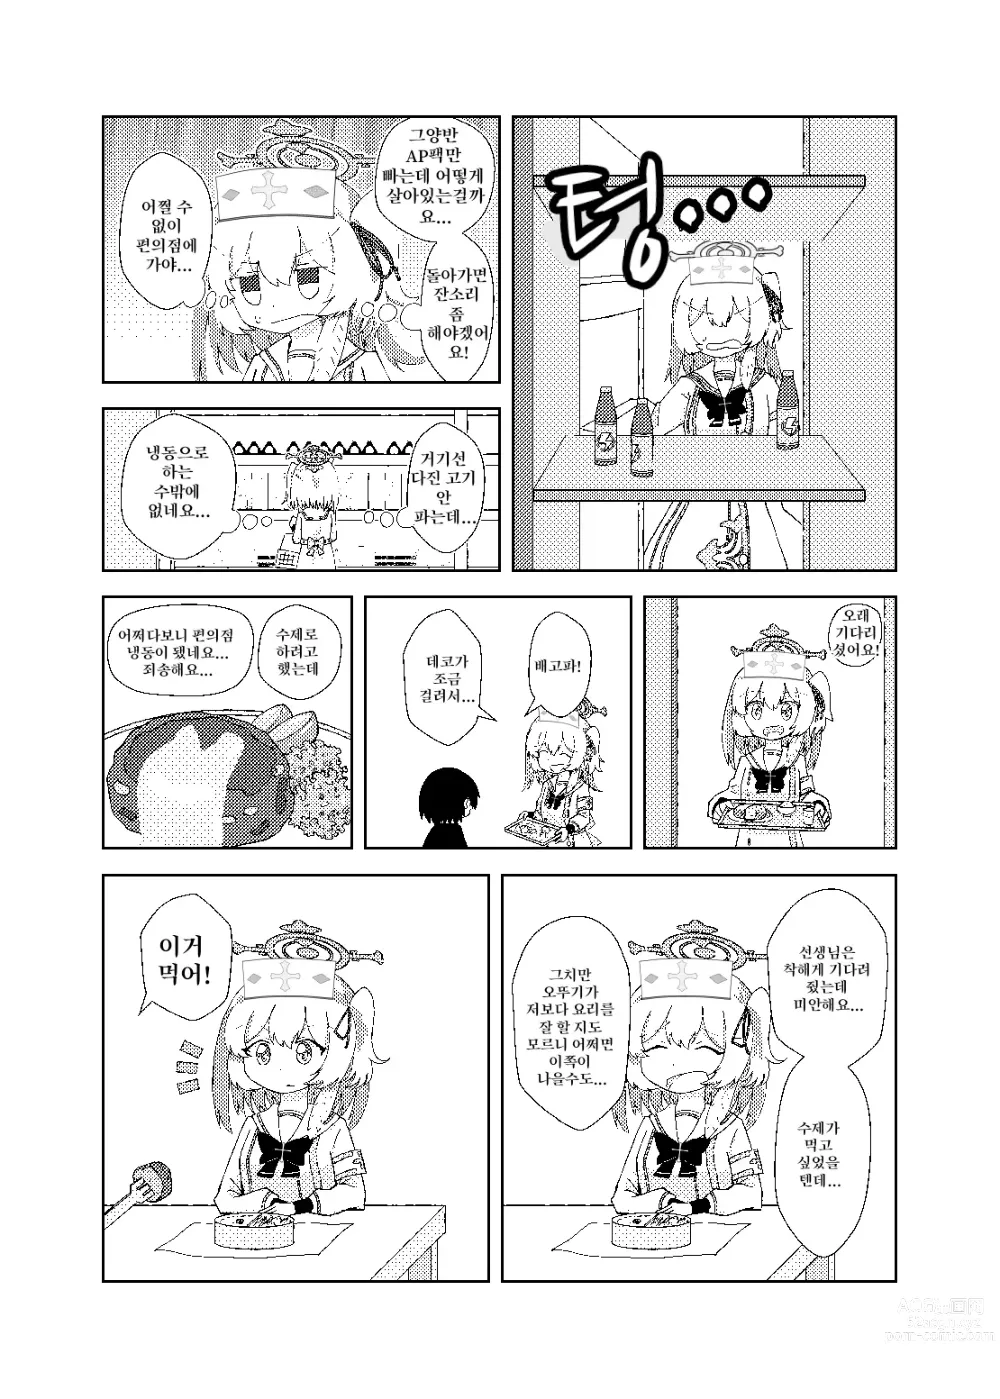 Page 8 of doujinshi 세리나가 유아화 선생님을 간호하는 이야기